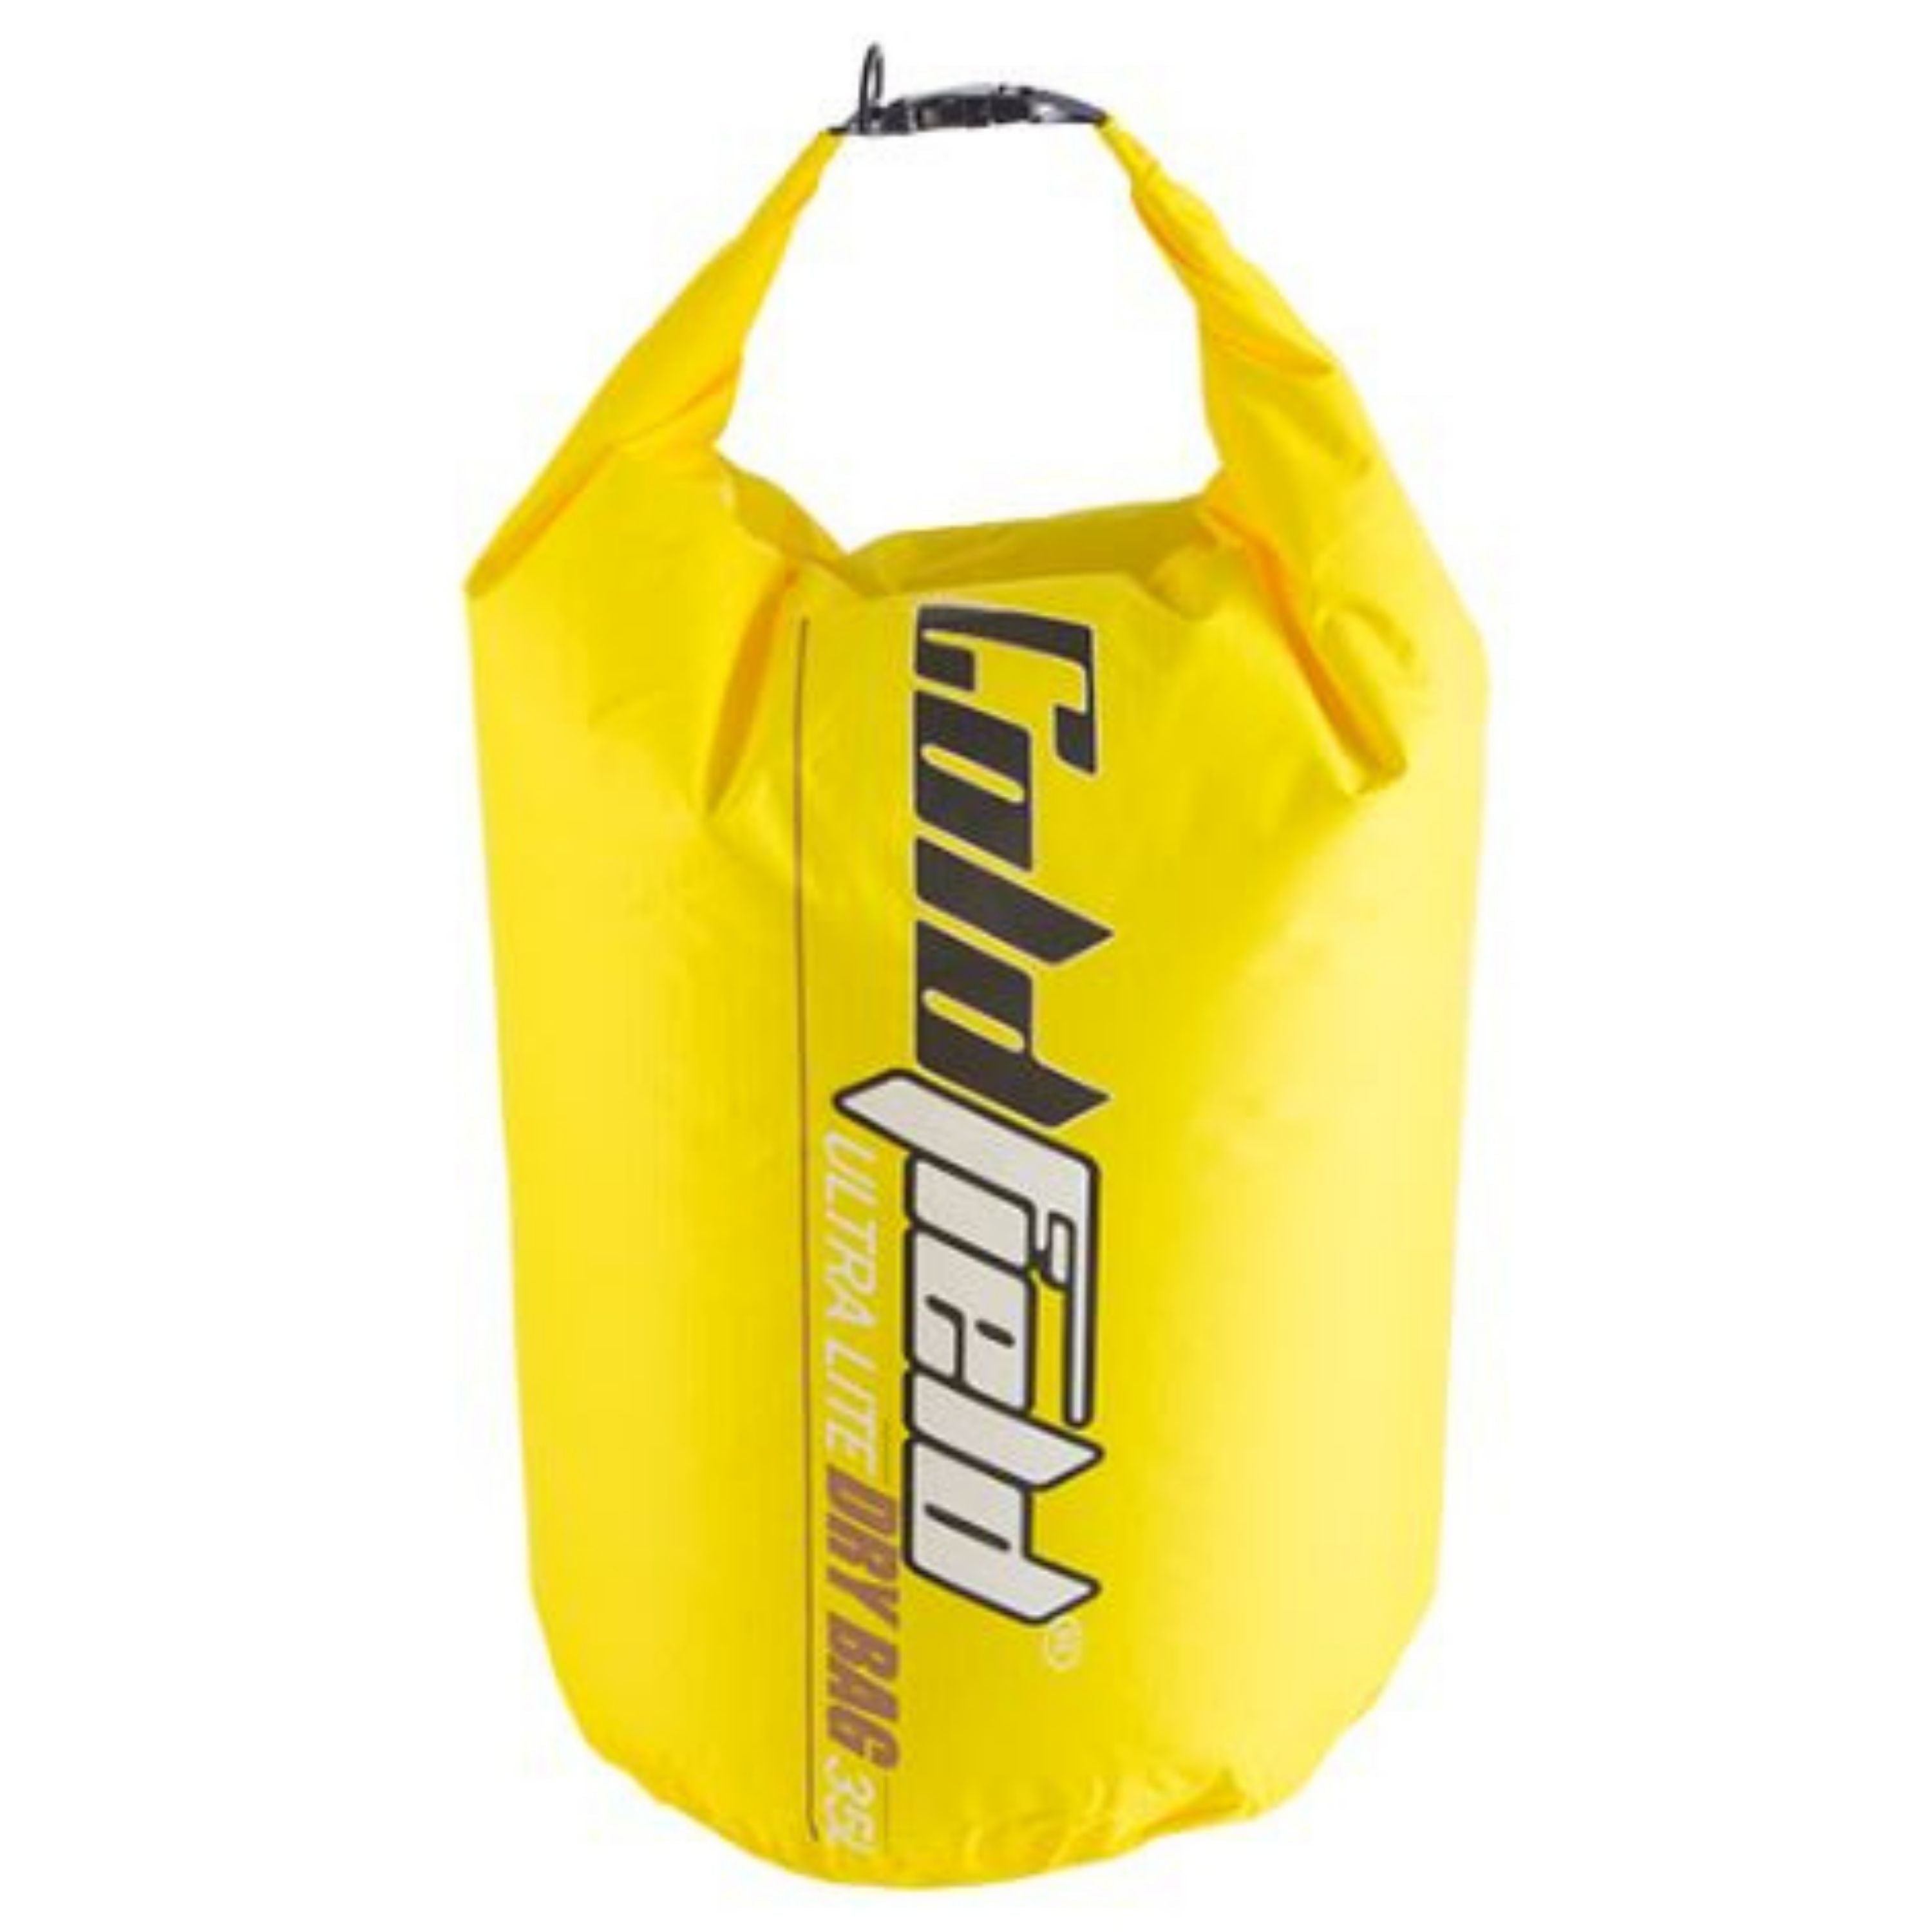 Sac imperméable ultraléger - 60 L||Ultra light dry bag - 60 L